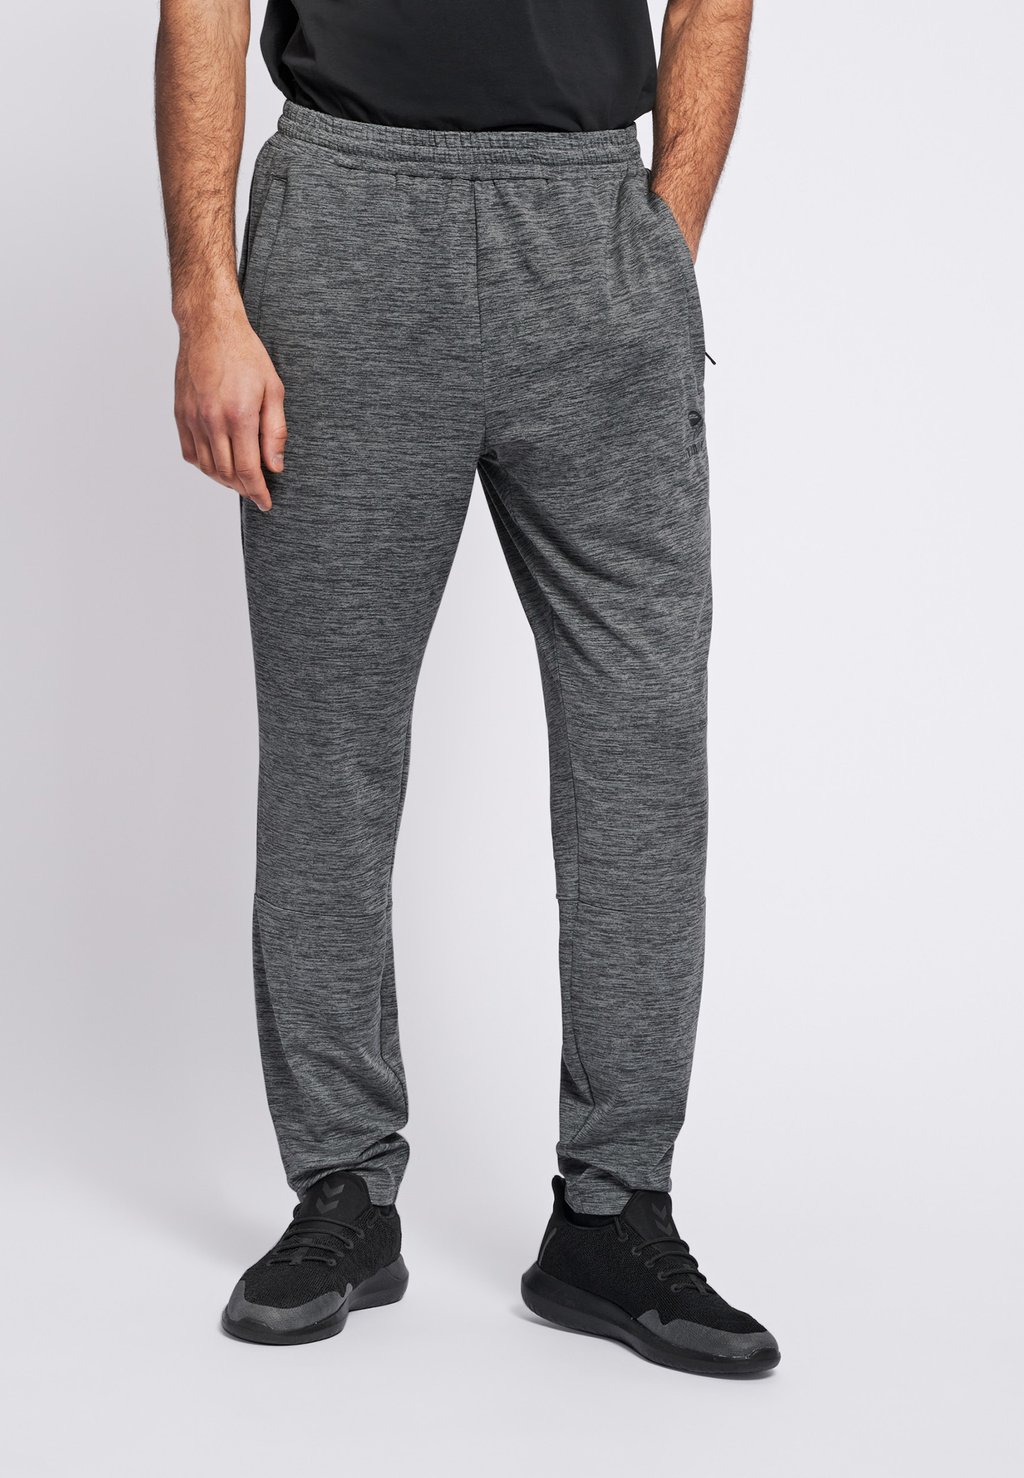 Спортивные брюки Hummel, темно-серый меланж спортивные брюки siksilk серый меланж